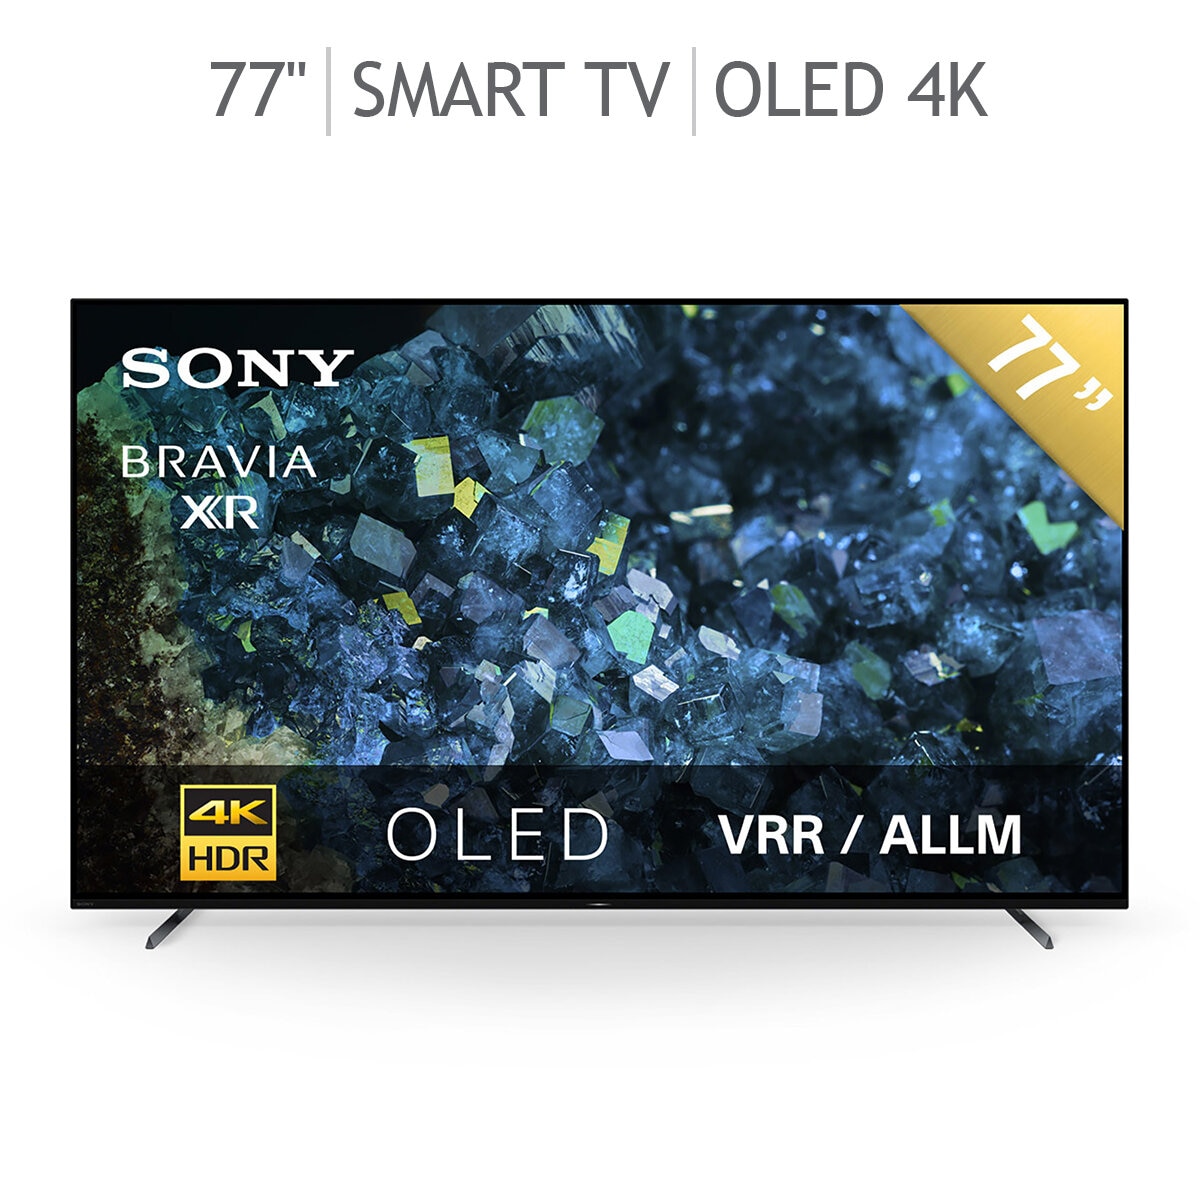 Sony Pantalla 77" OLED 4K UHD Smart TV